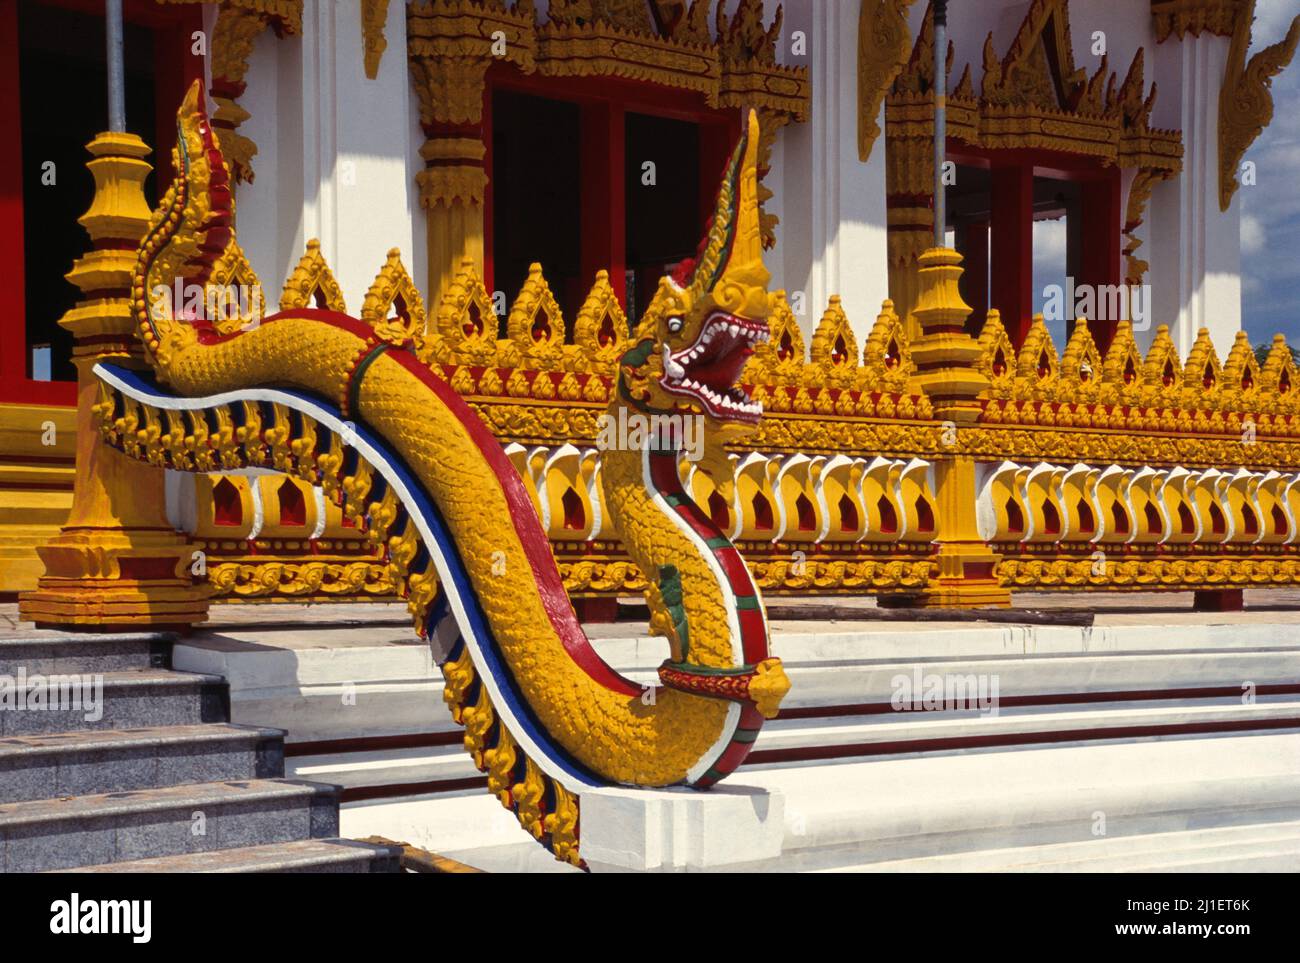 Thailand. Khon Kaen. Tempel Von Nong Waeng. Naga-Statue am Eingang. Stockfoto